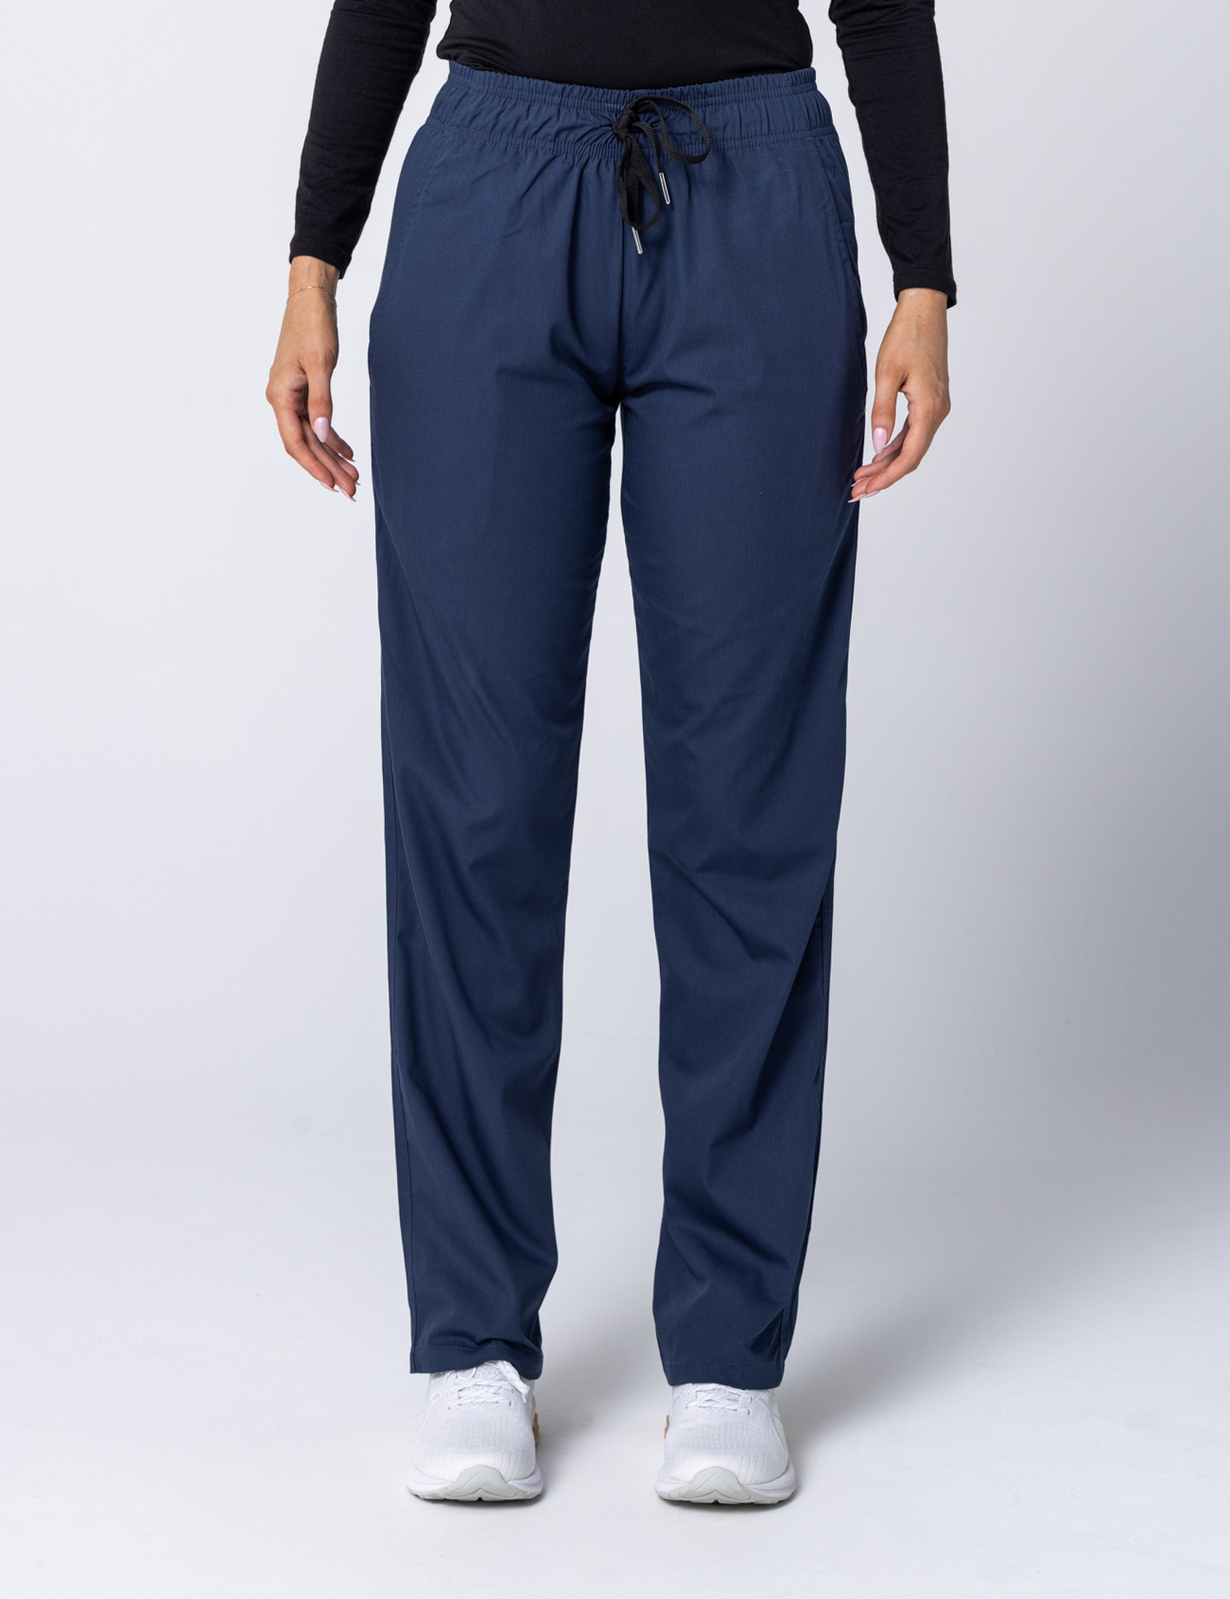 Women's Regular Cut Pants - Navy - X Large